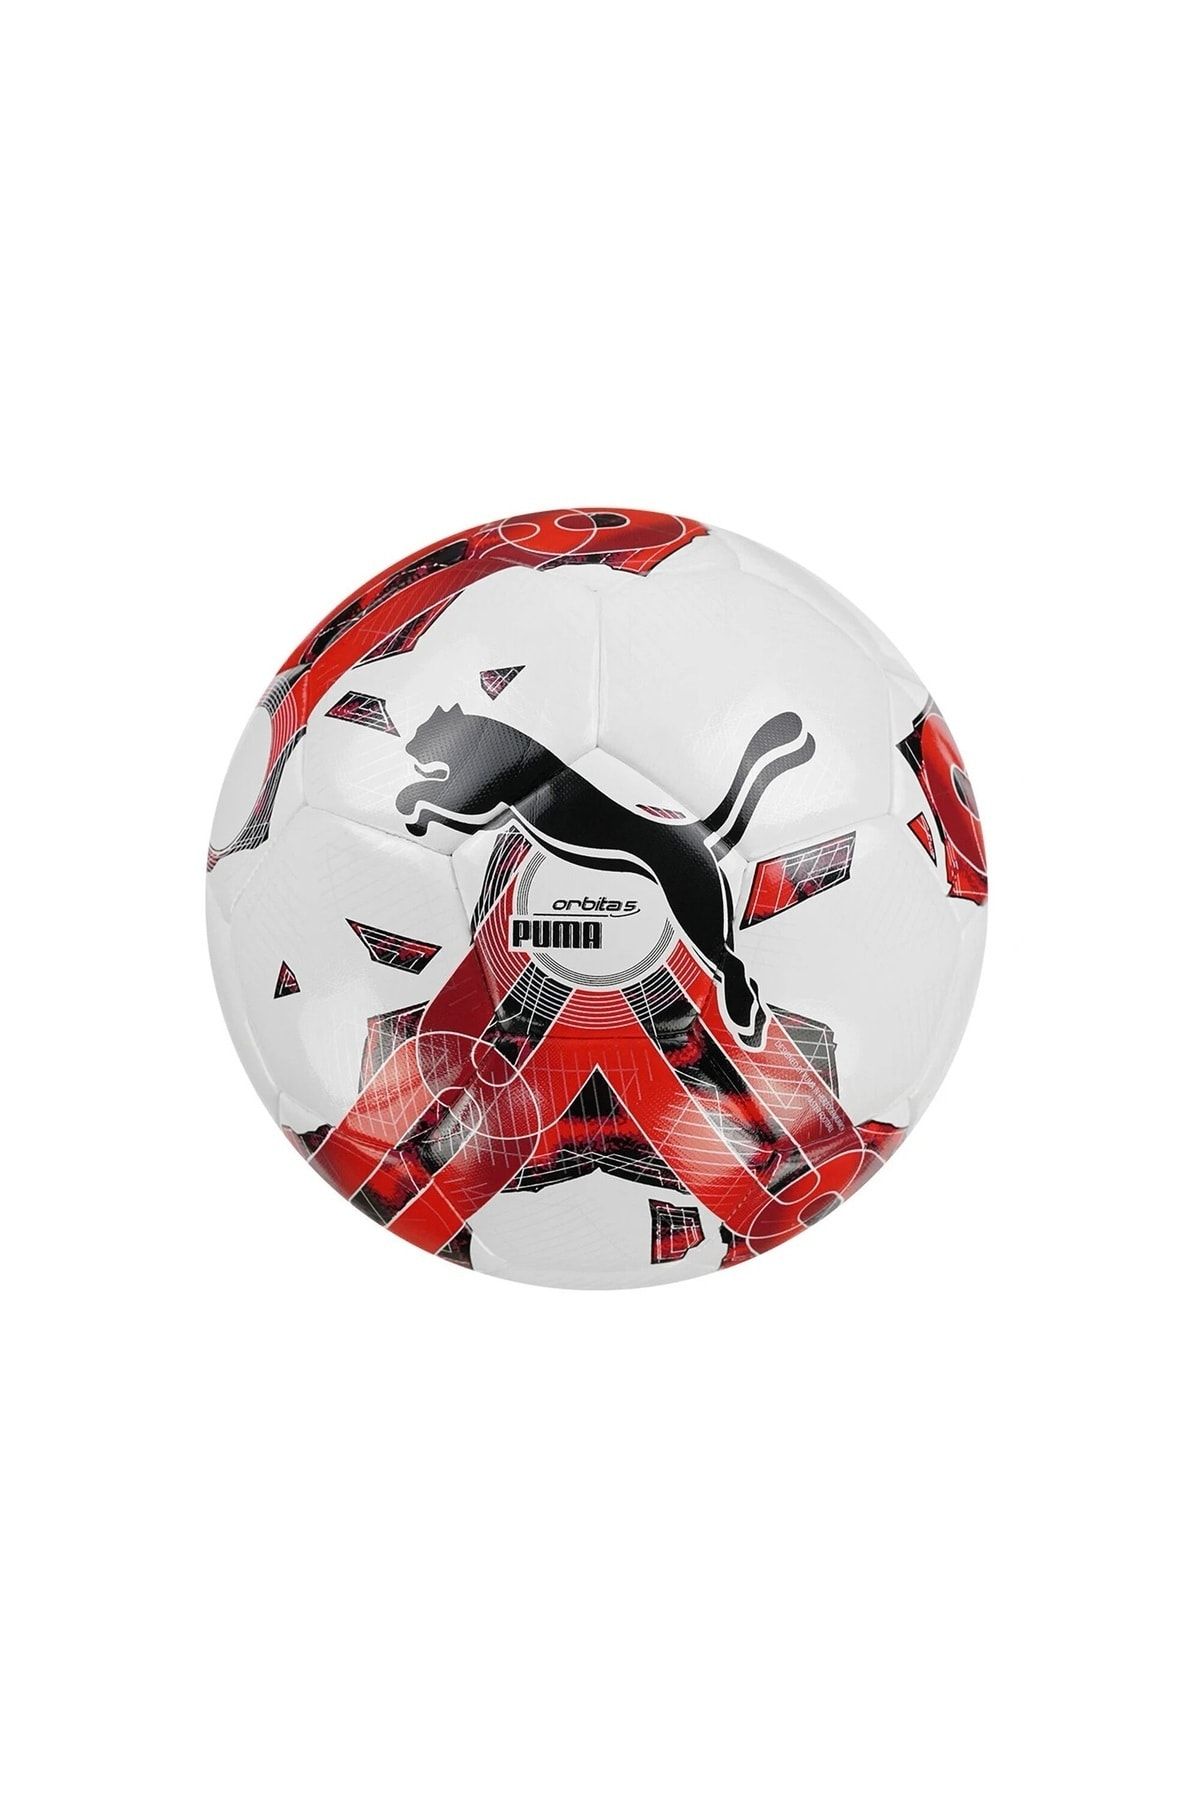 Puma Orbita 5 Hyb Futbol Topu Hybrid Teknoloji 08378302